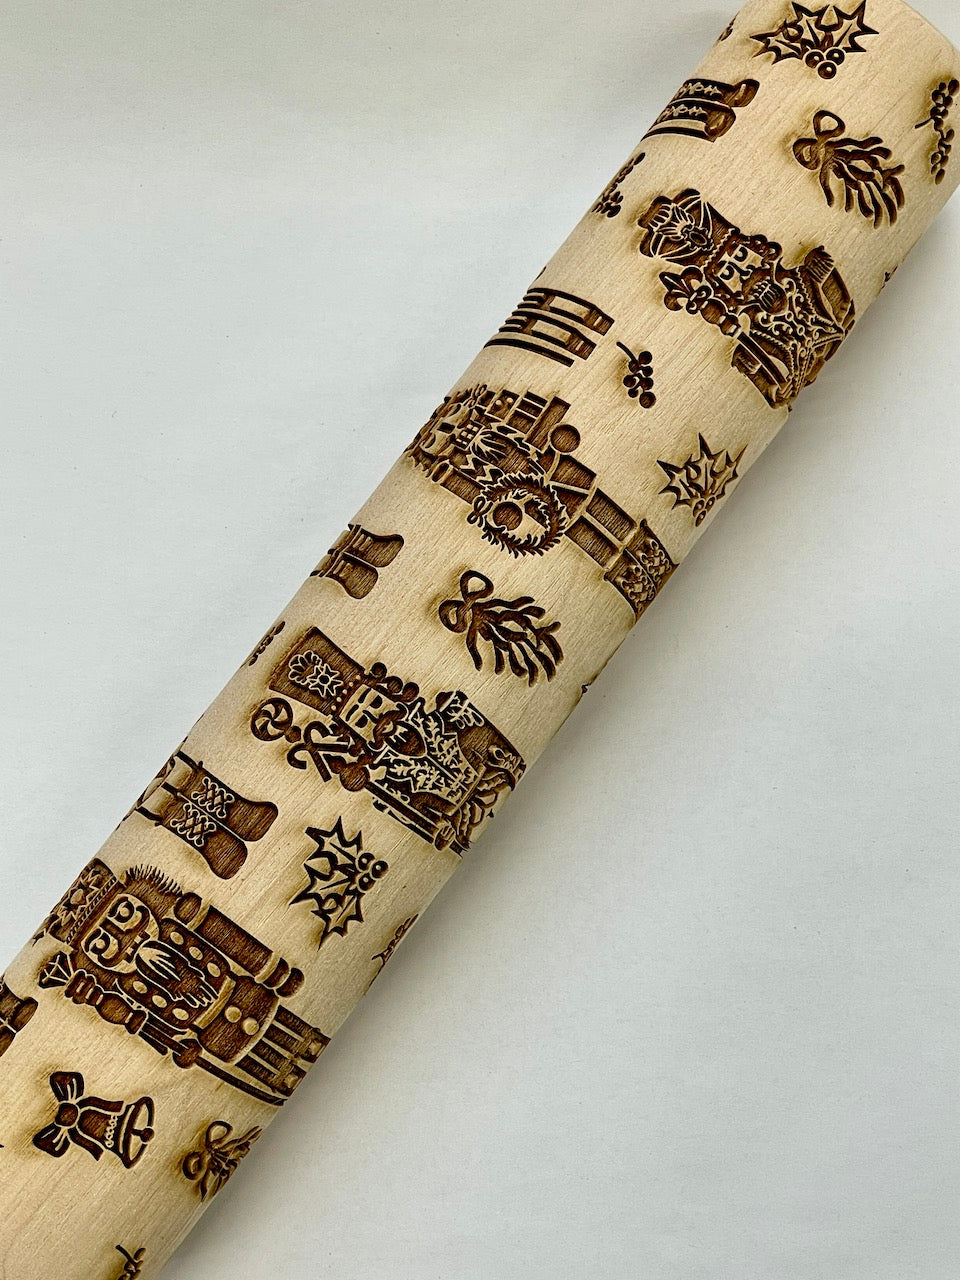 Nutcracker Textured Rolling Pin